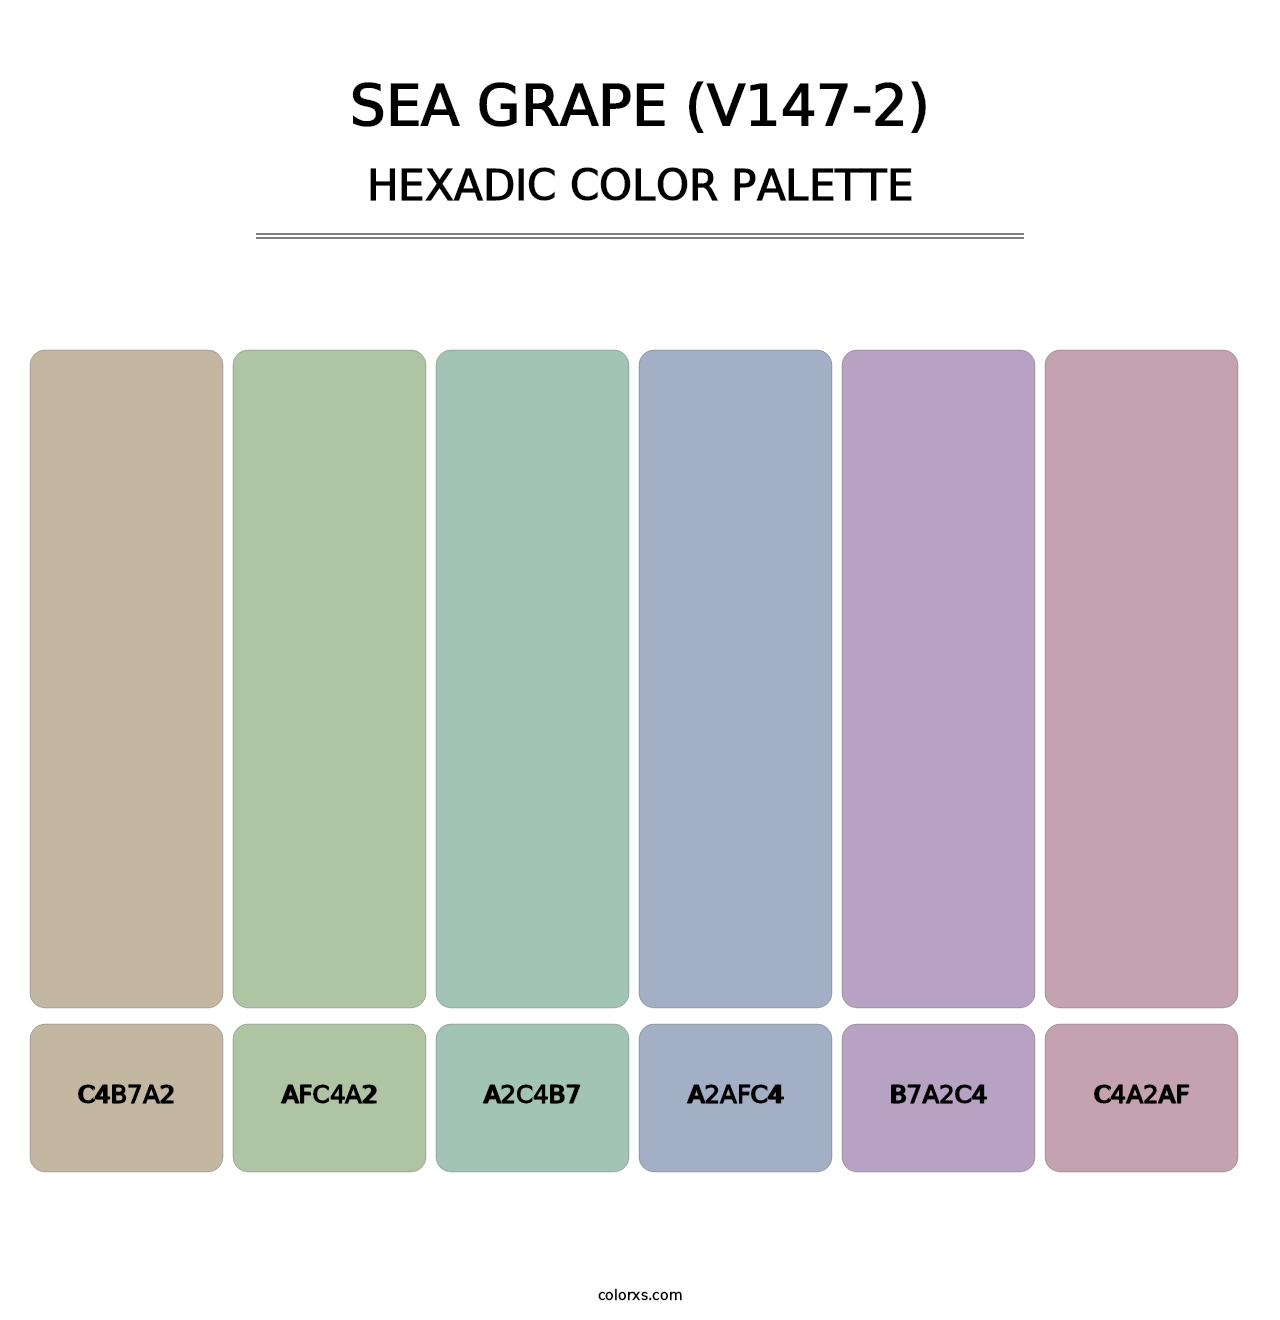 Sea Grape (V147-2) - Hexadic Color Palette